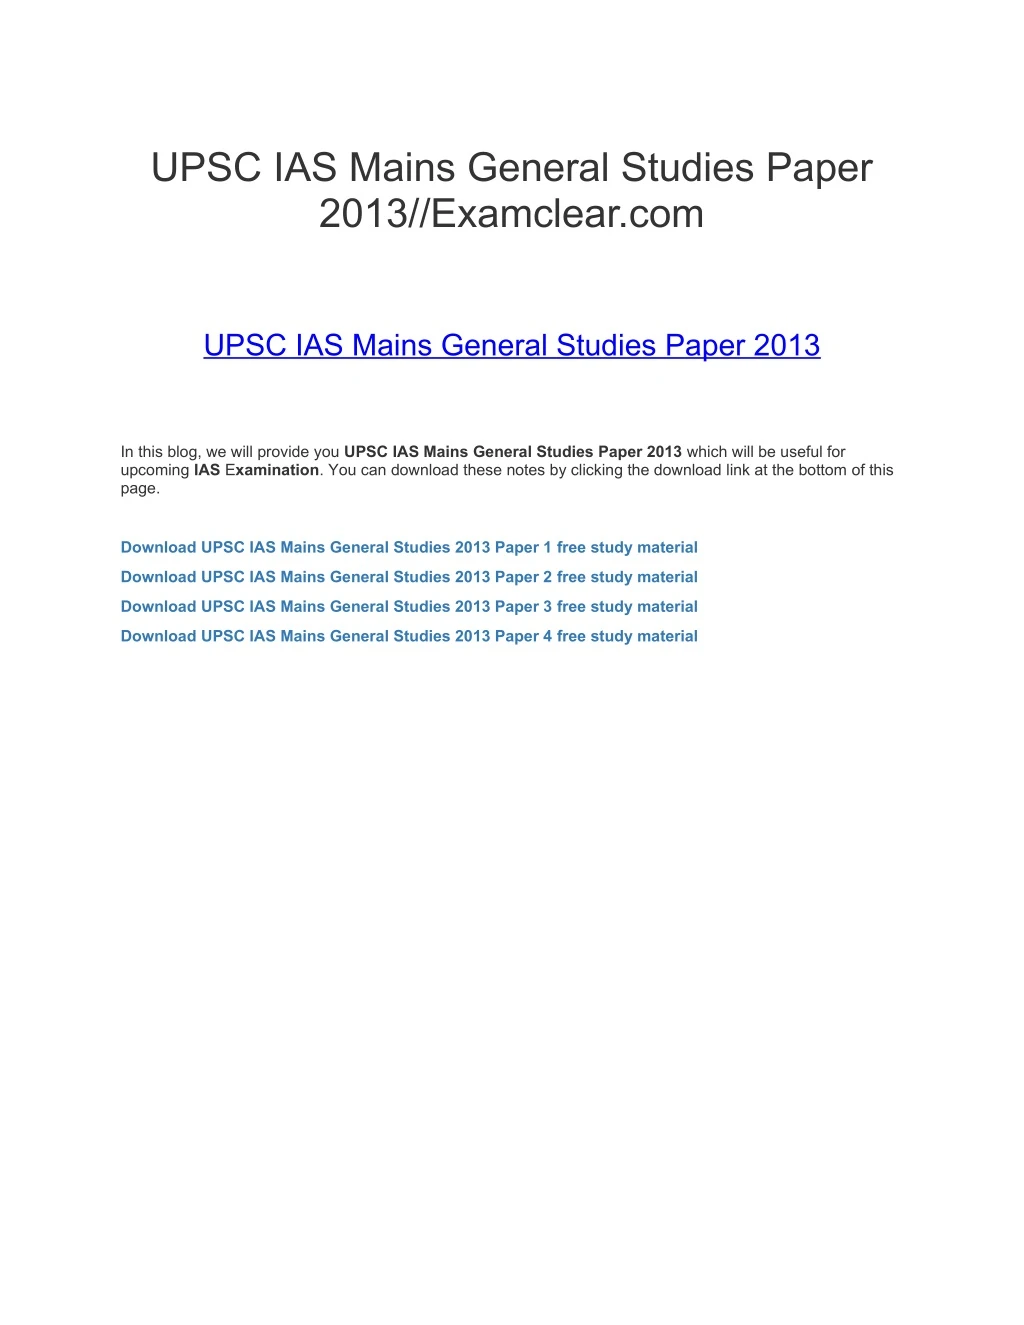 upsc ias mains general studies paper 2013